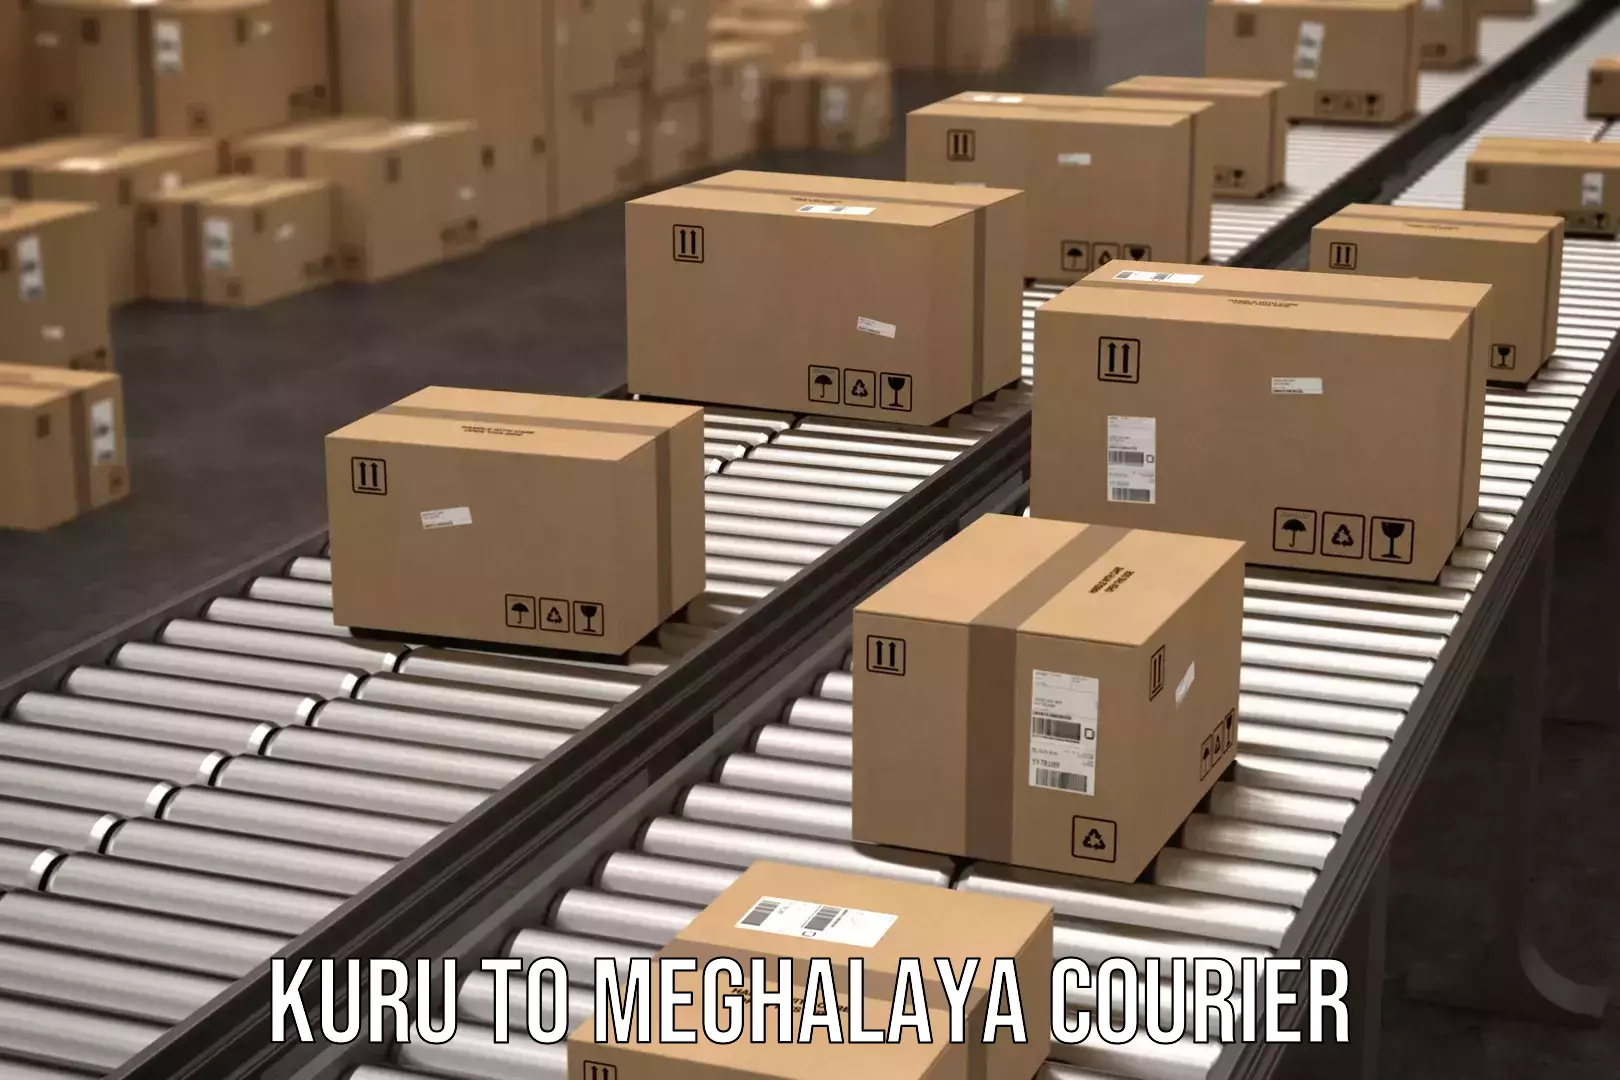 Efficient order fulfillment in Kuru to Meghalaya